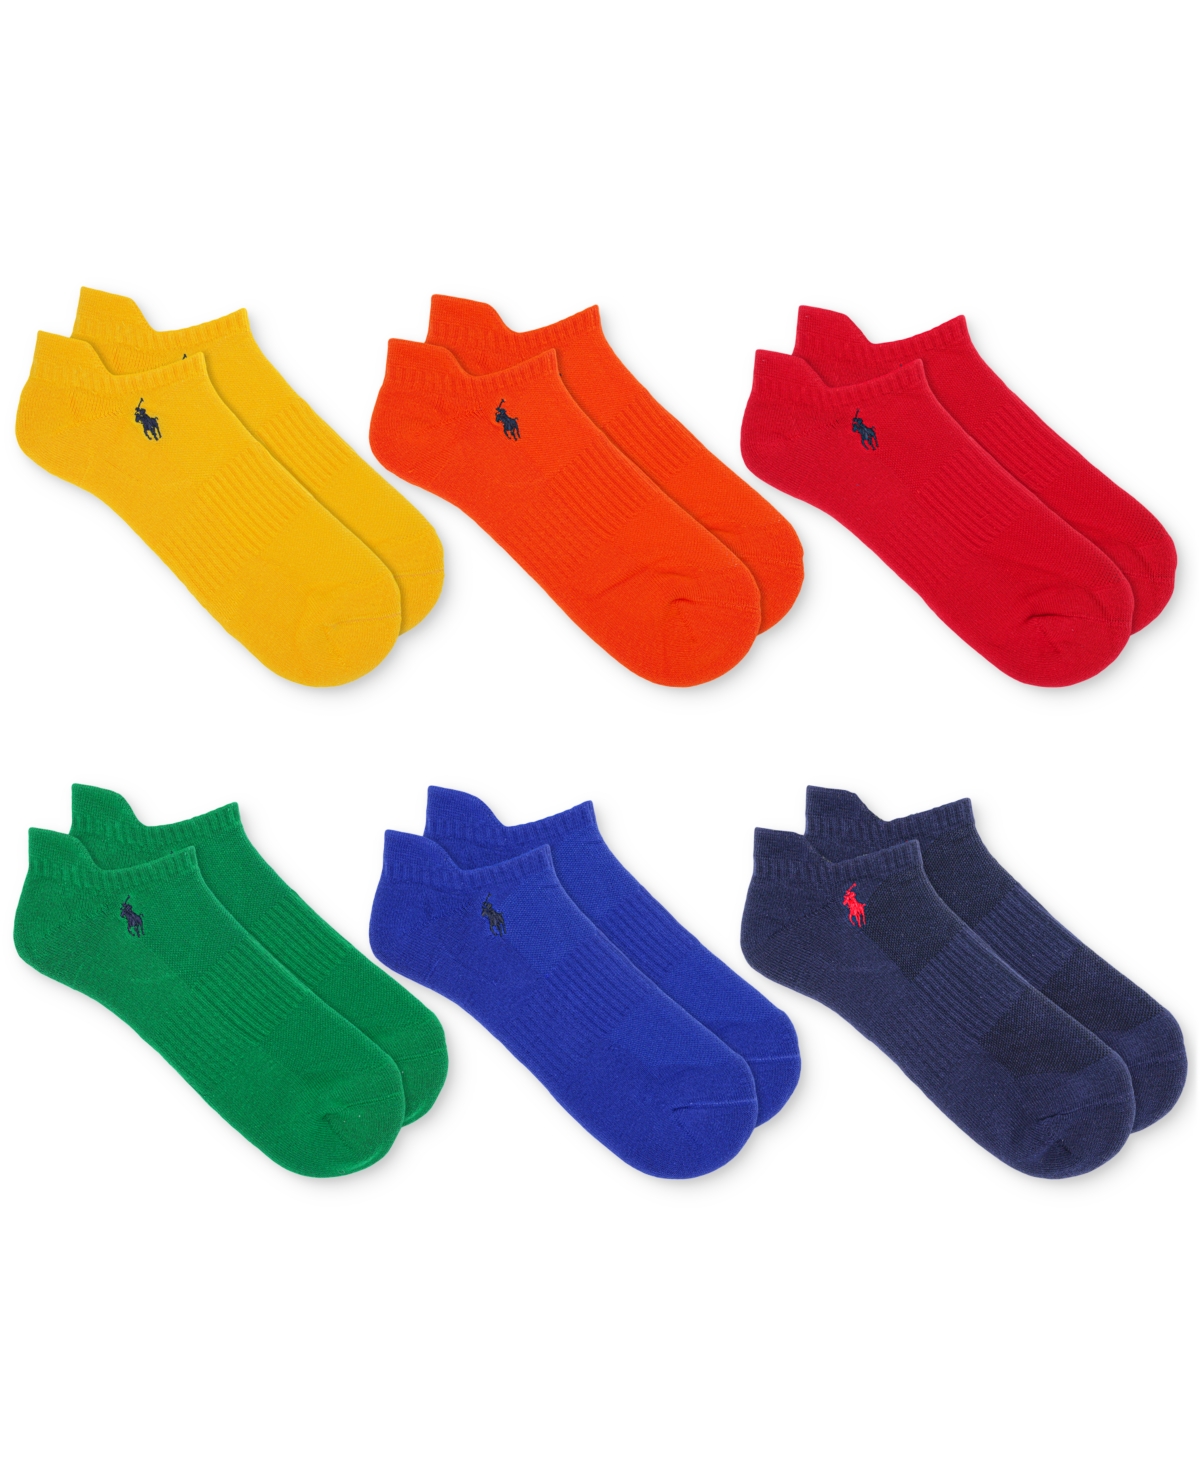 Polo Ralph Lauren Men's 6-pk. Performance Colorful Low Cut Socks In Asst